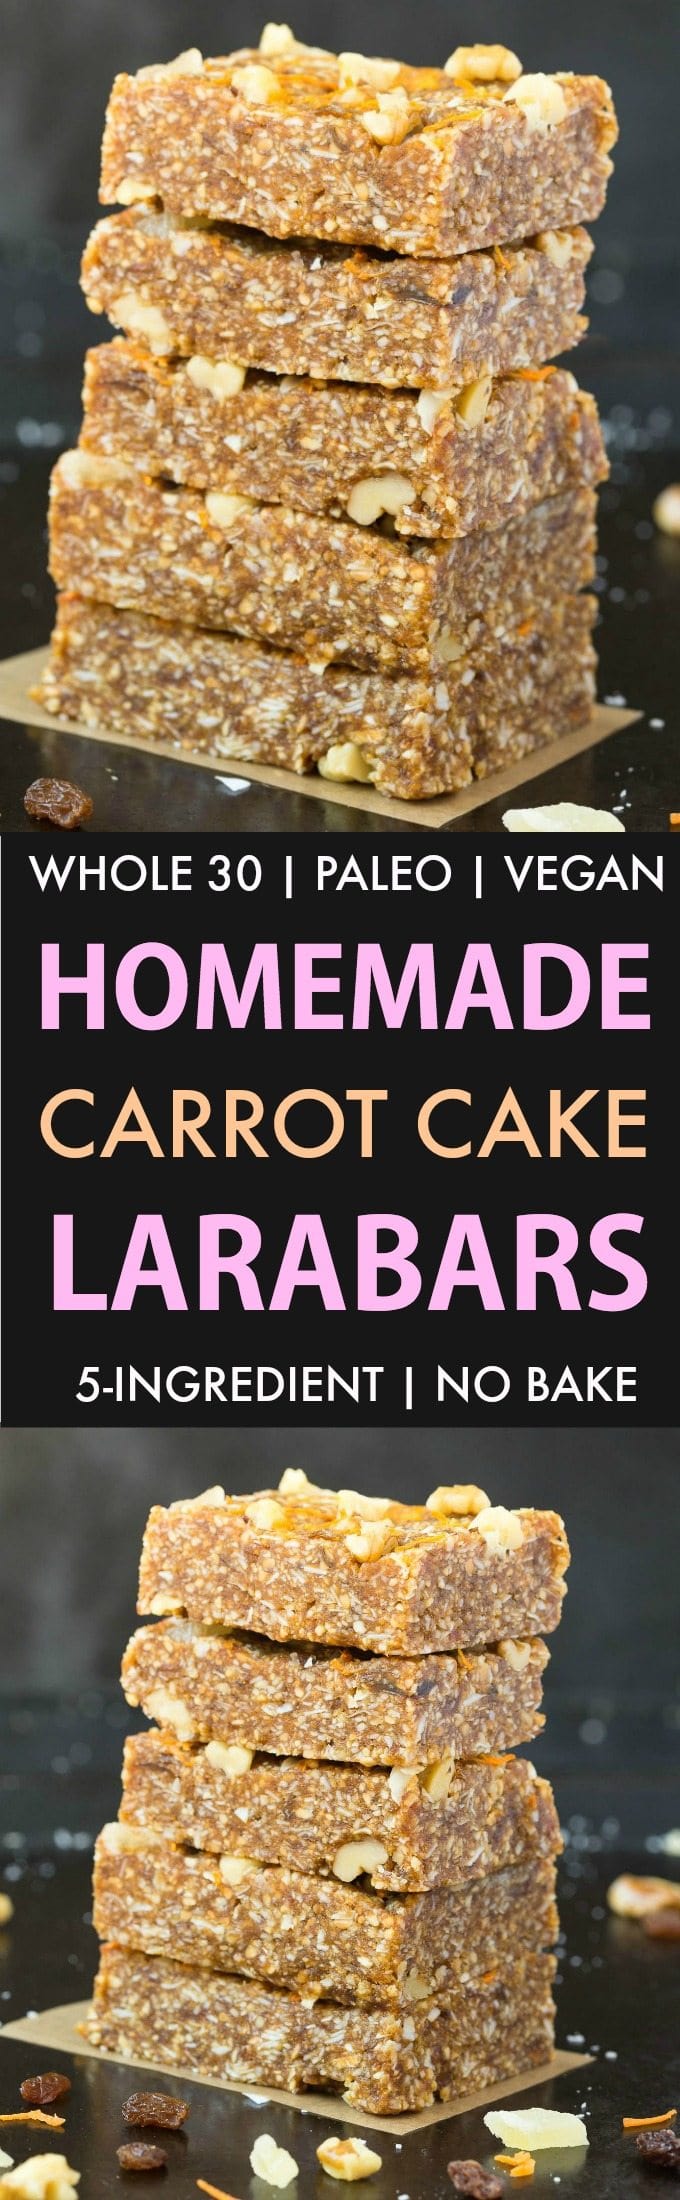 no bake carrot cake bars